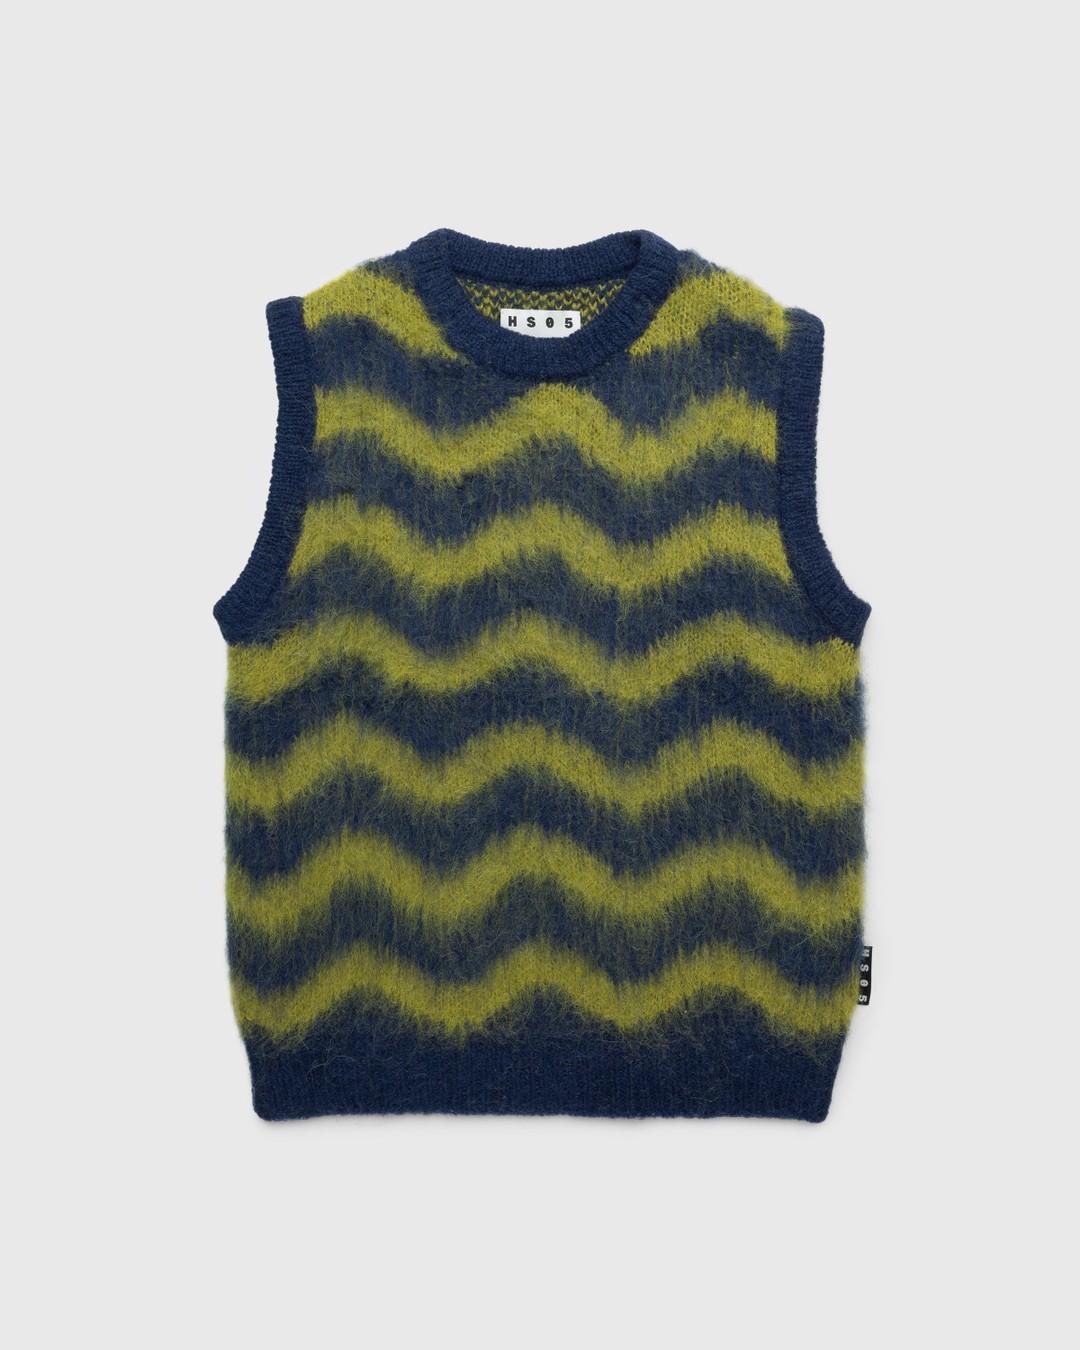 Highsnobiety HS05 – Alpaca Fuzzy Wave Sweater Vest Navy/Olive green - Knitwear - Multi - Image 1